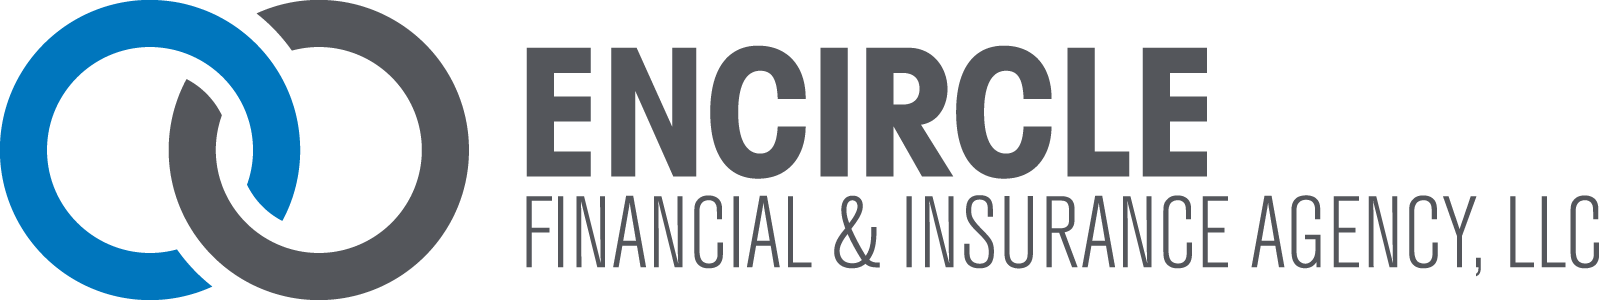 Encircle Financial & Insurance Agency, LLC